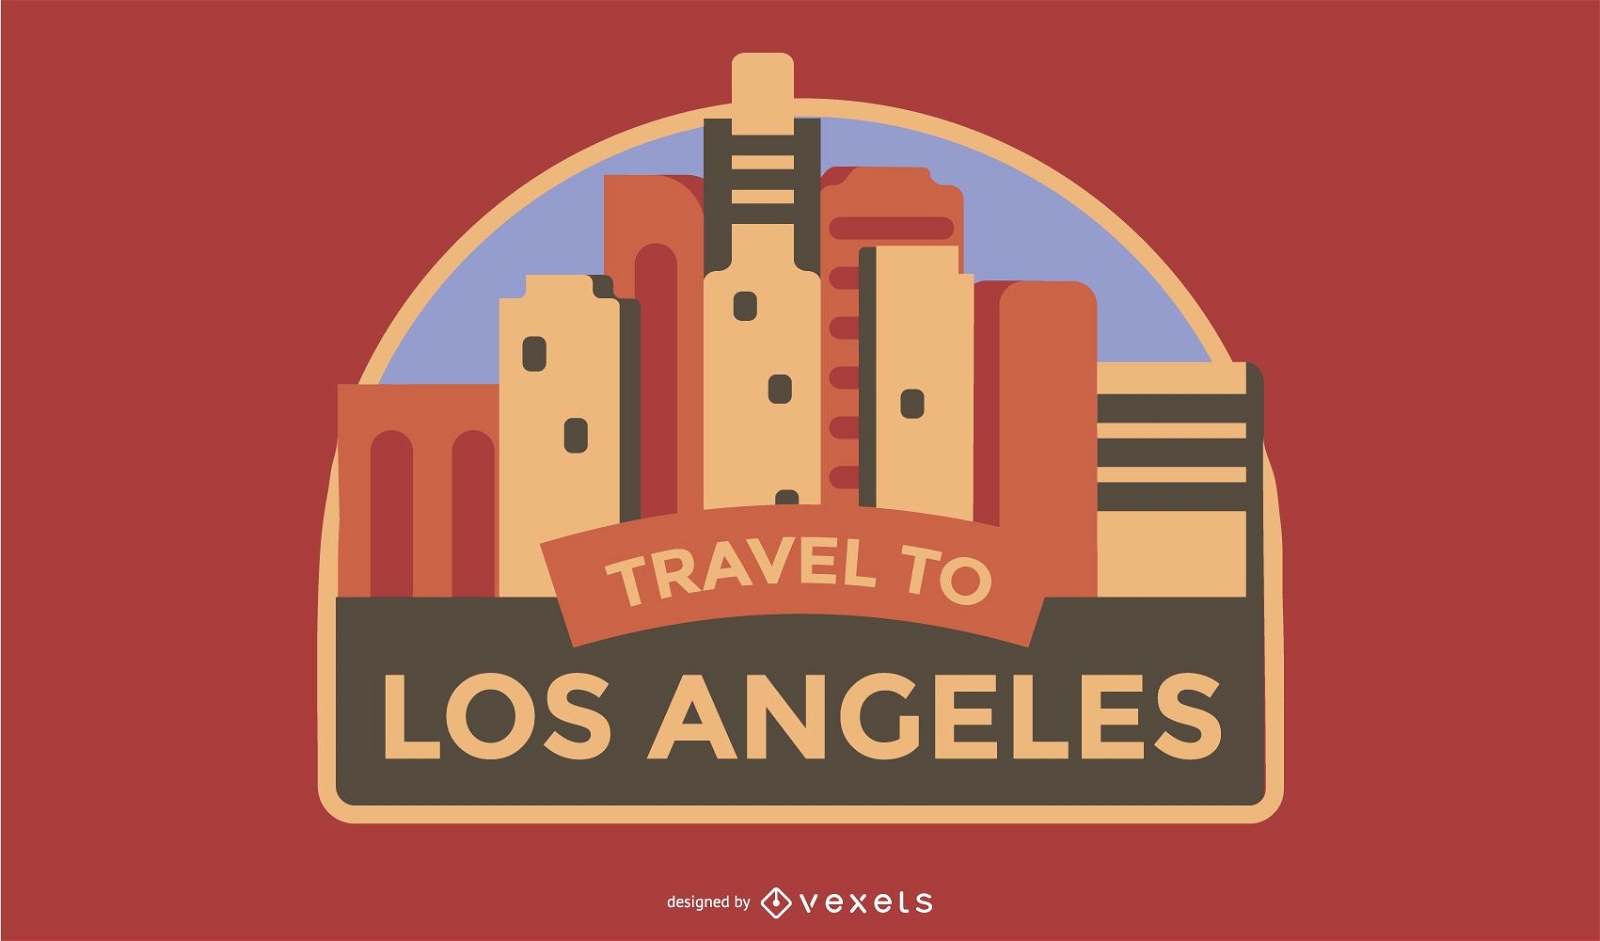 Travel to Los Angeles Badge